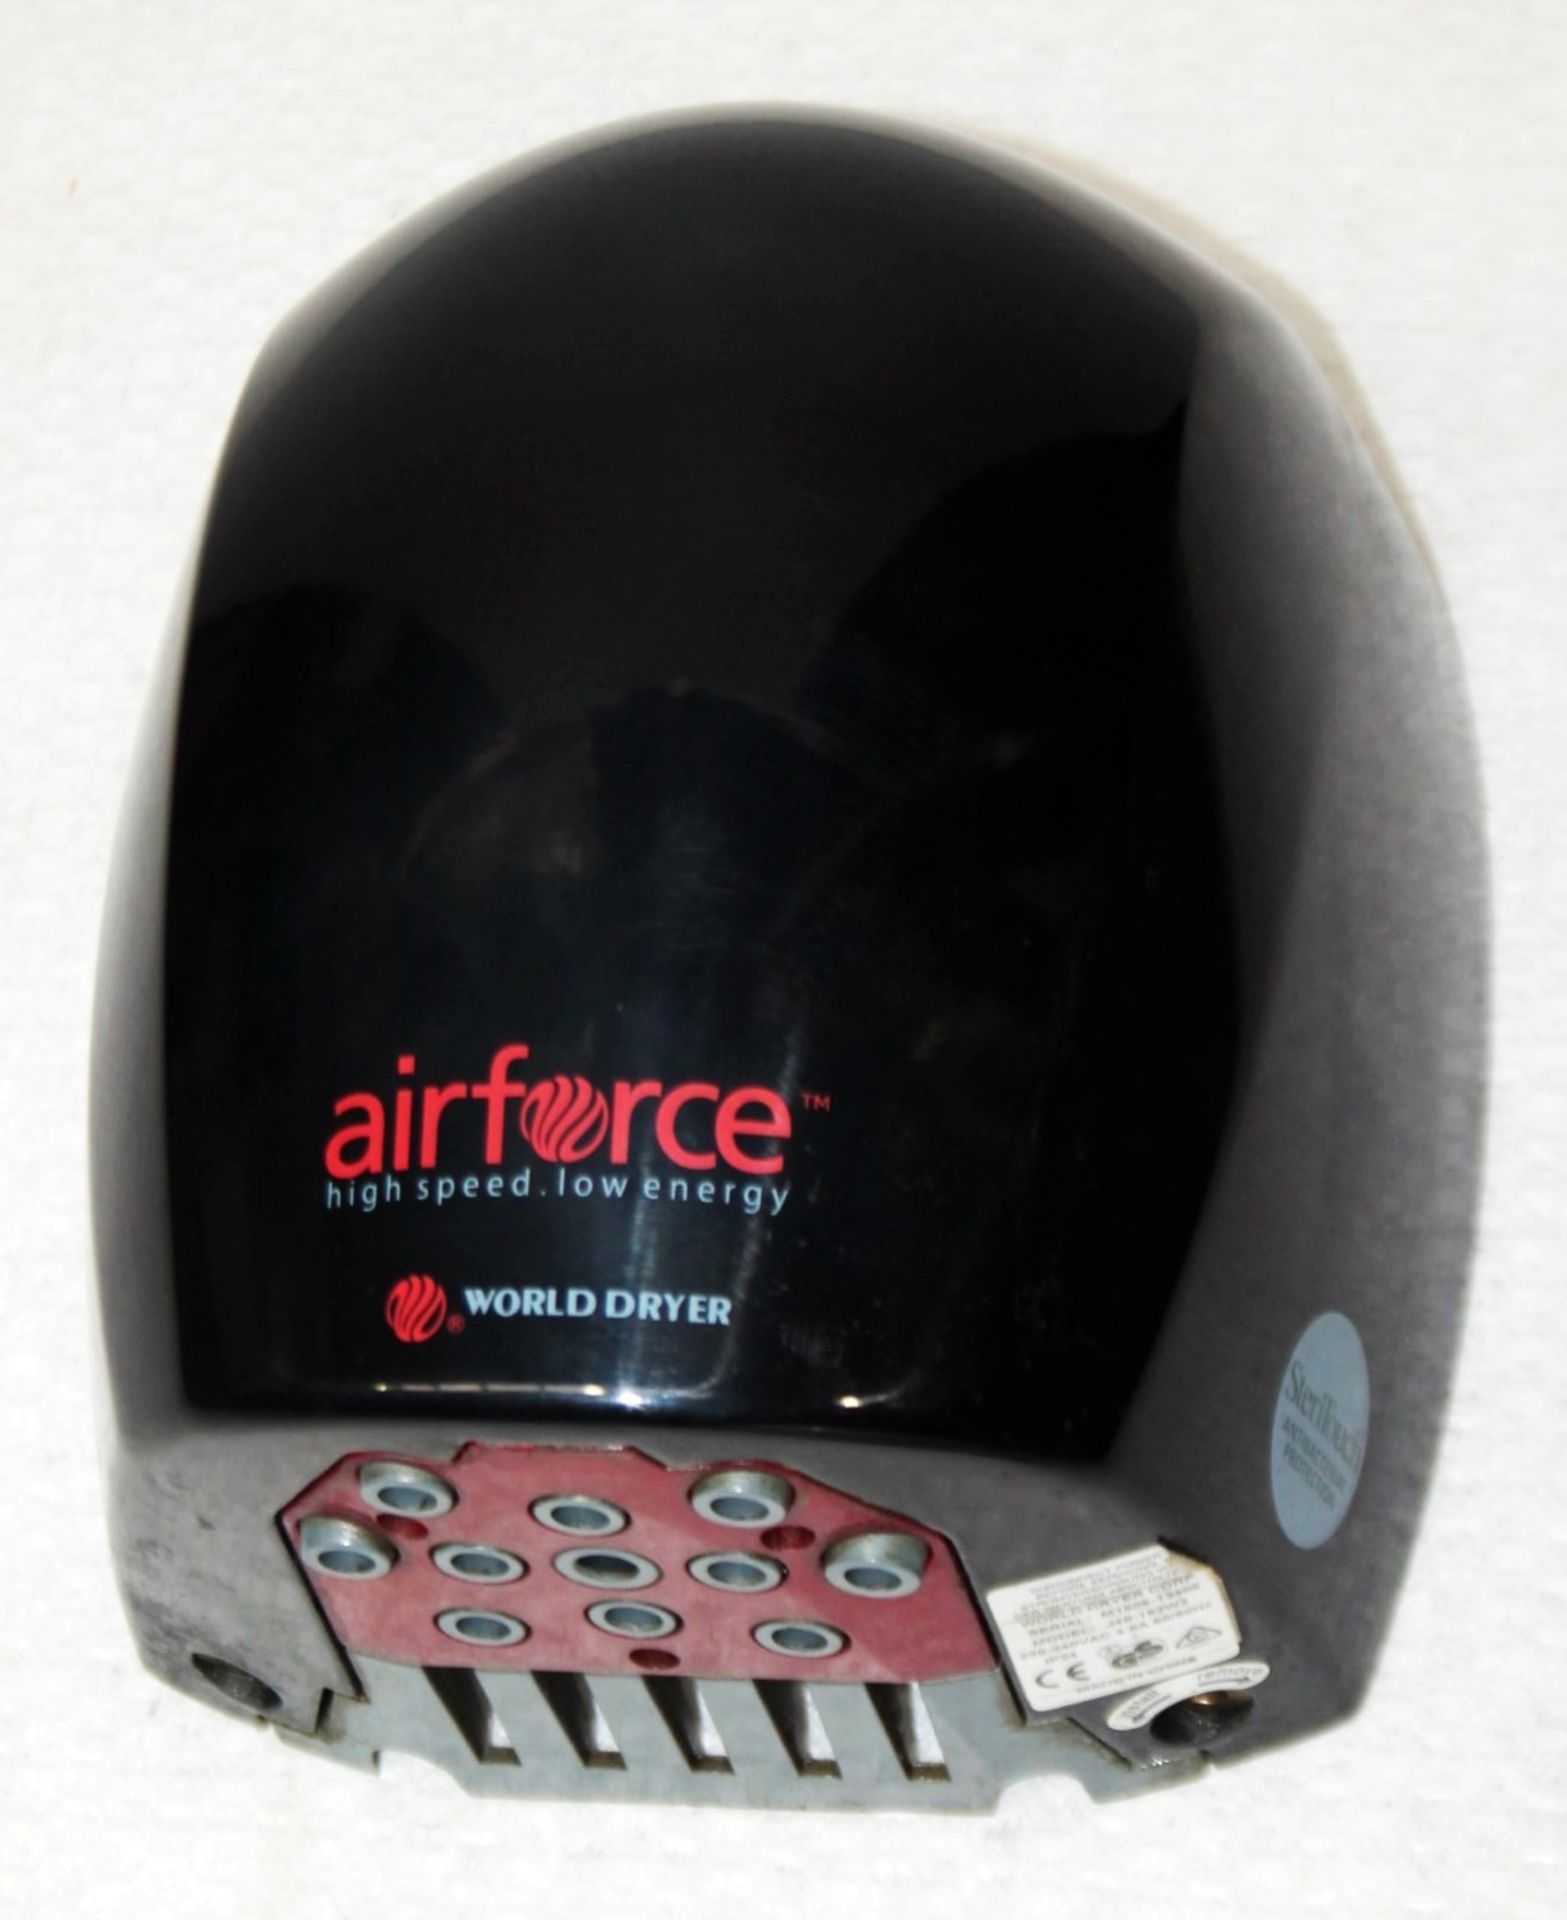 1 x Warner Howard 'Airforce' Commercial Hand Dryer In Black - Original RRP £391.00 - CL805 - - Image 4 of 5